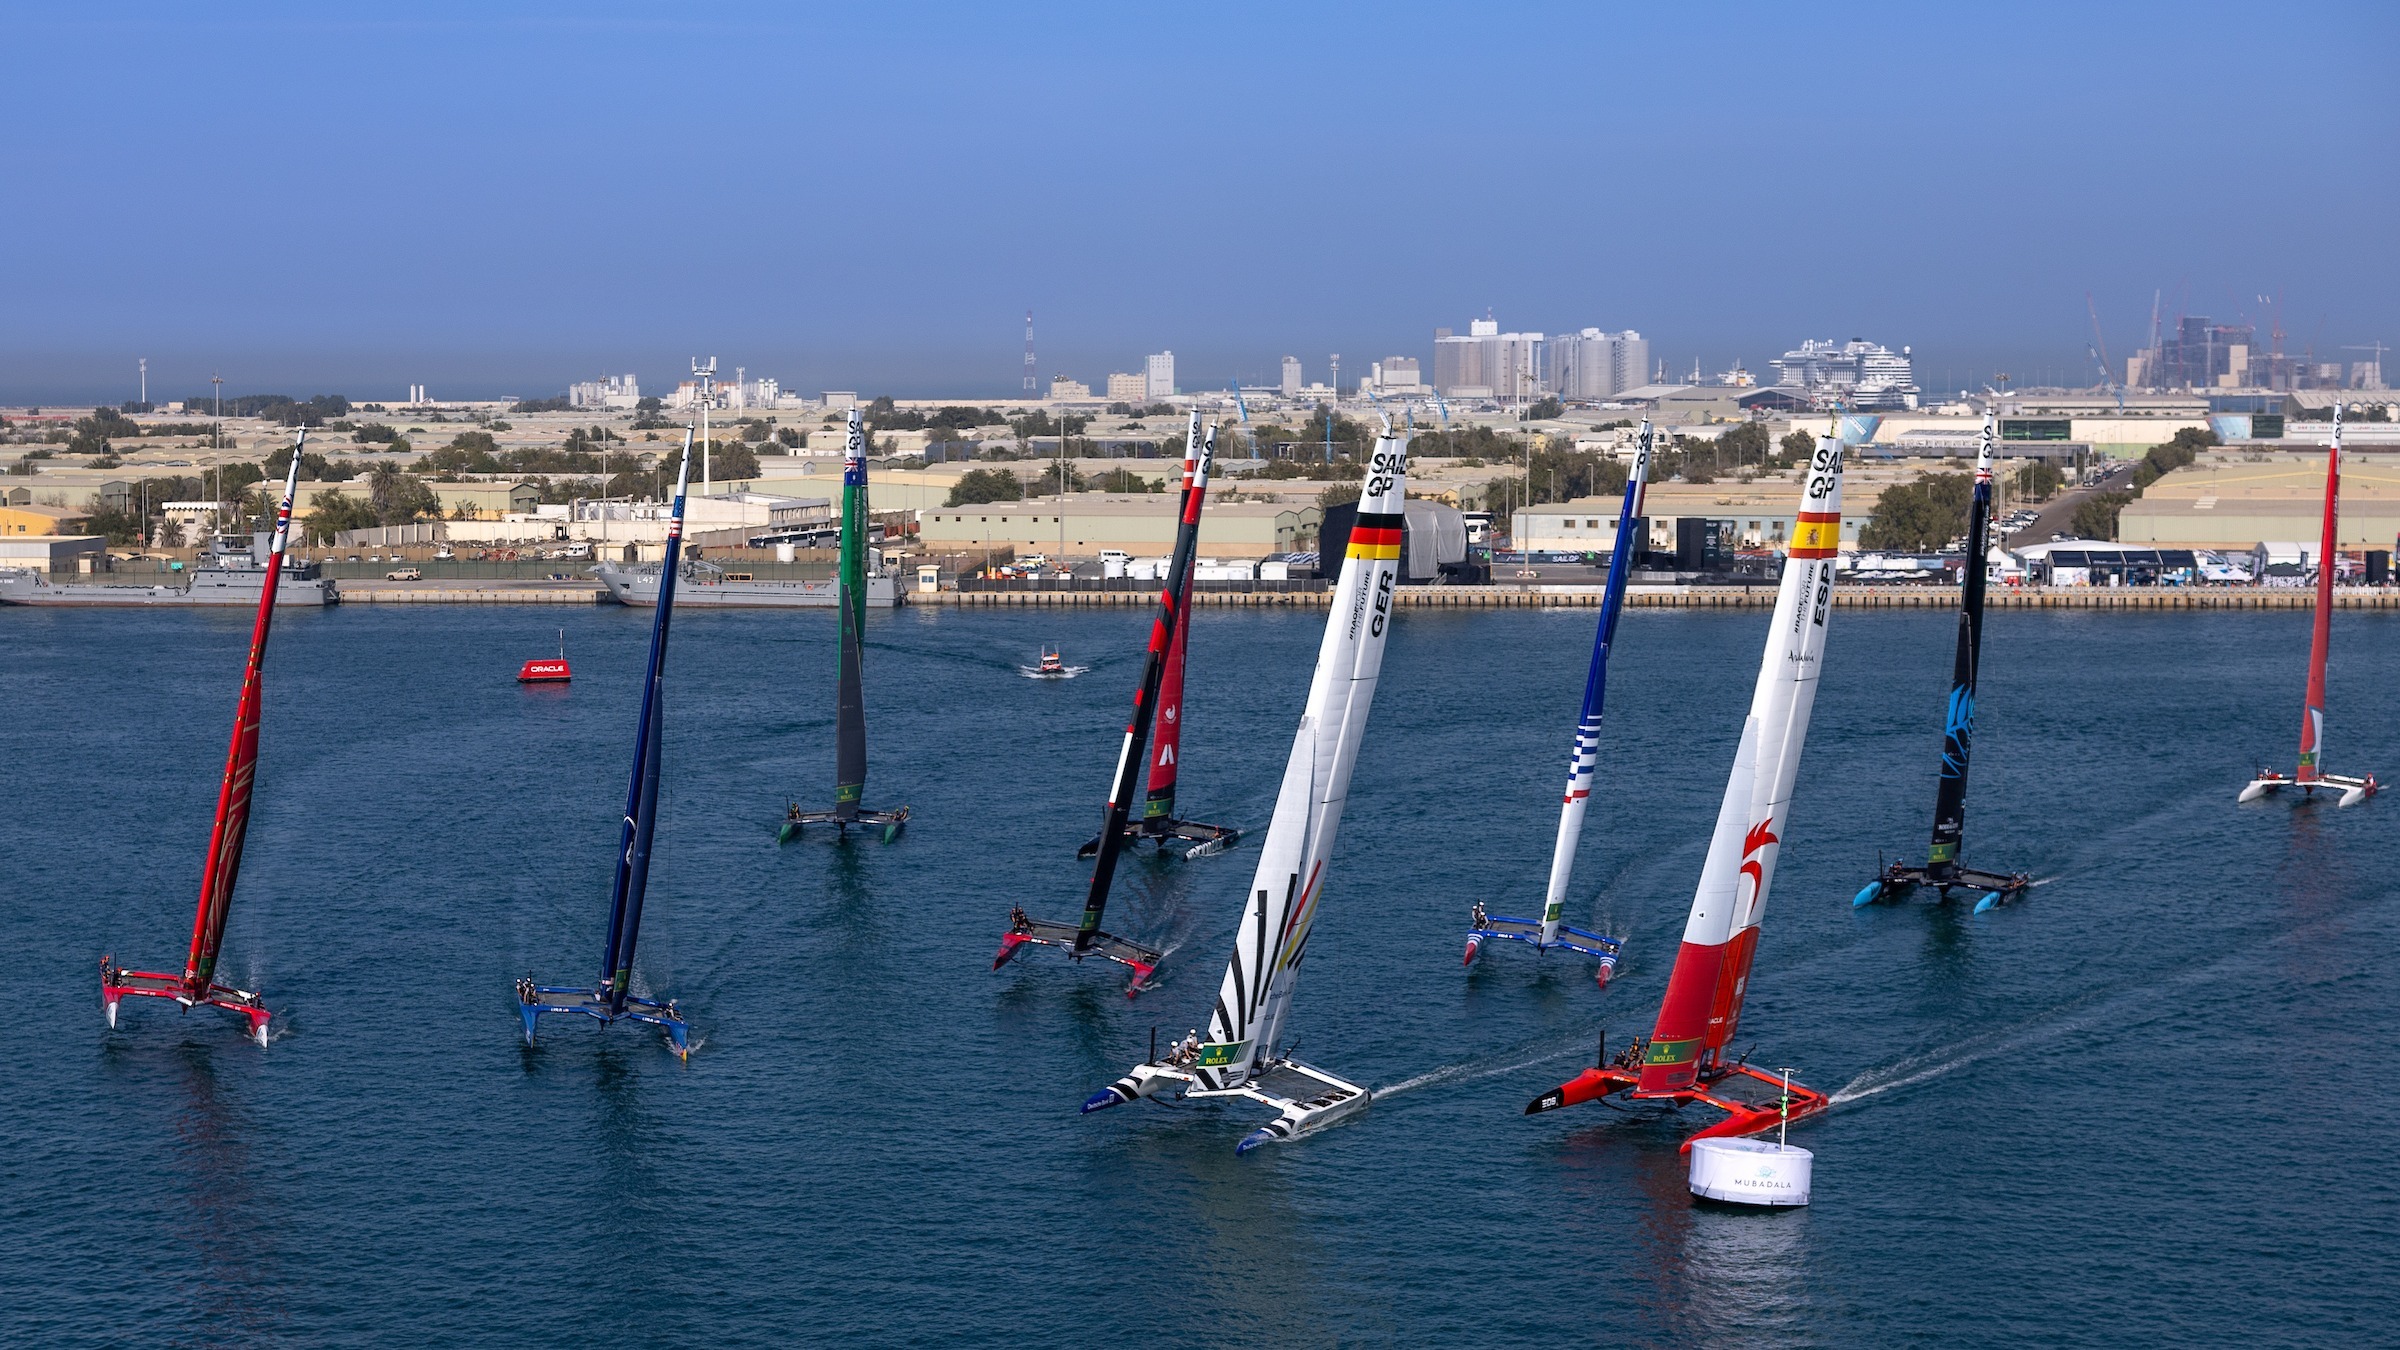 Season 4 // F50 fleet underway on first day of racing in Abu Dhabi